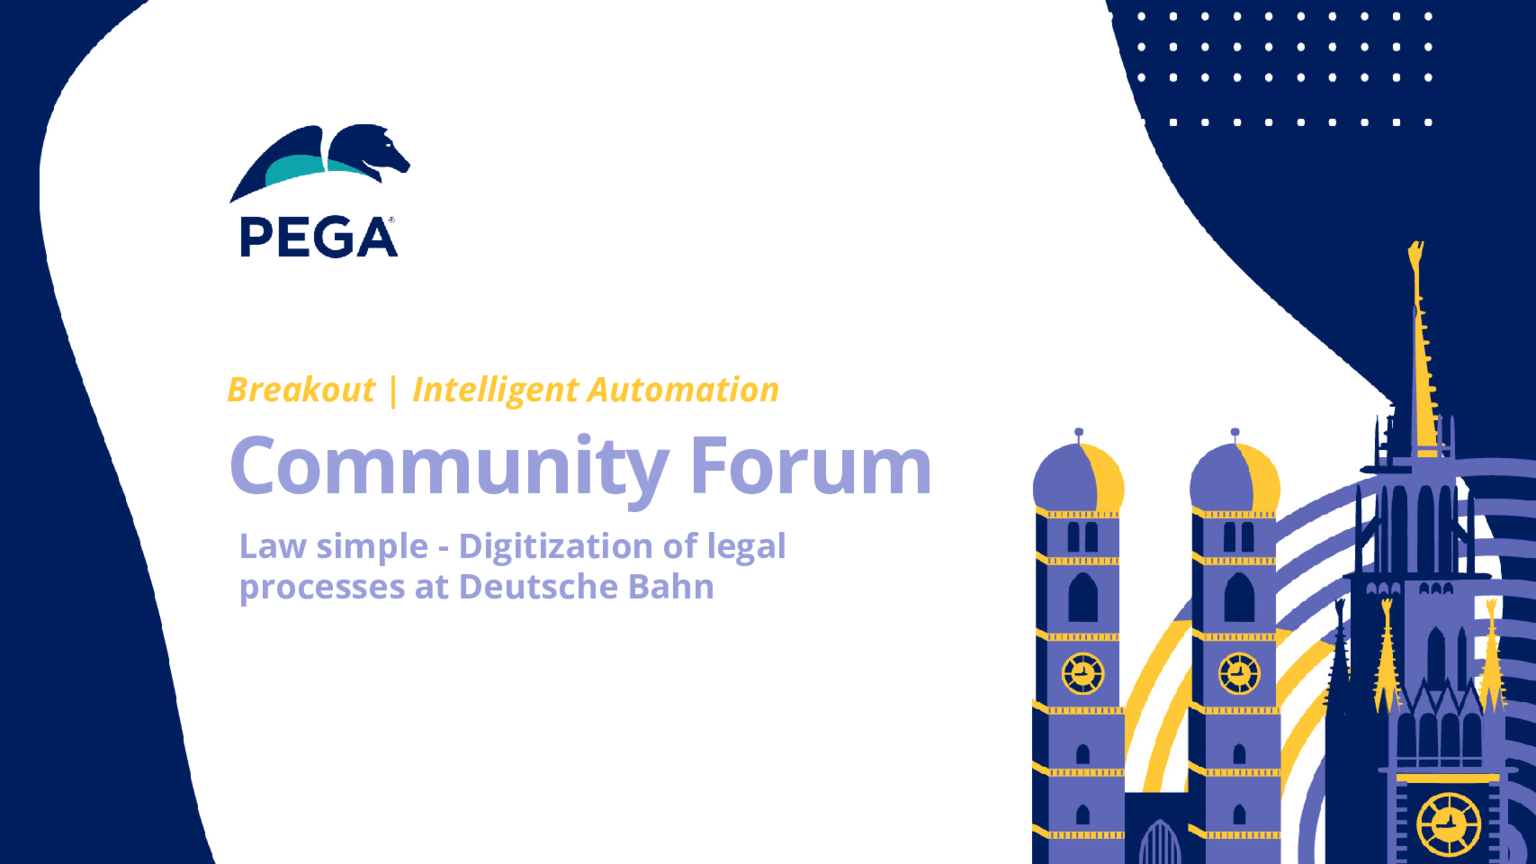 Pega Community Forum - Deutsche Bahn Success Story: Law simple - Digitization of legal processes (Presentation)